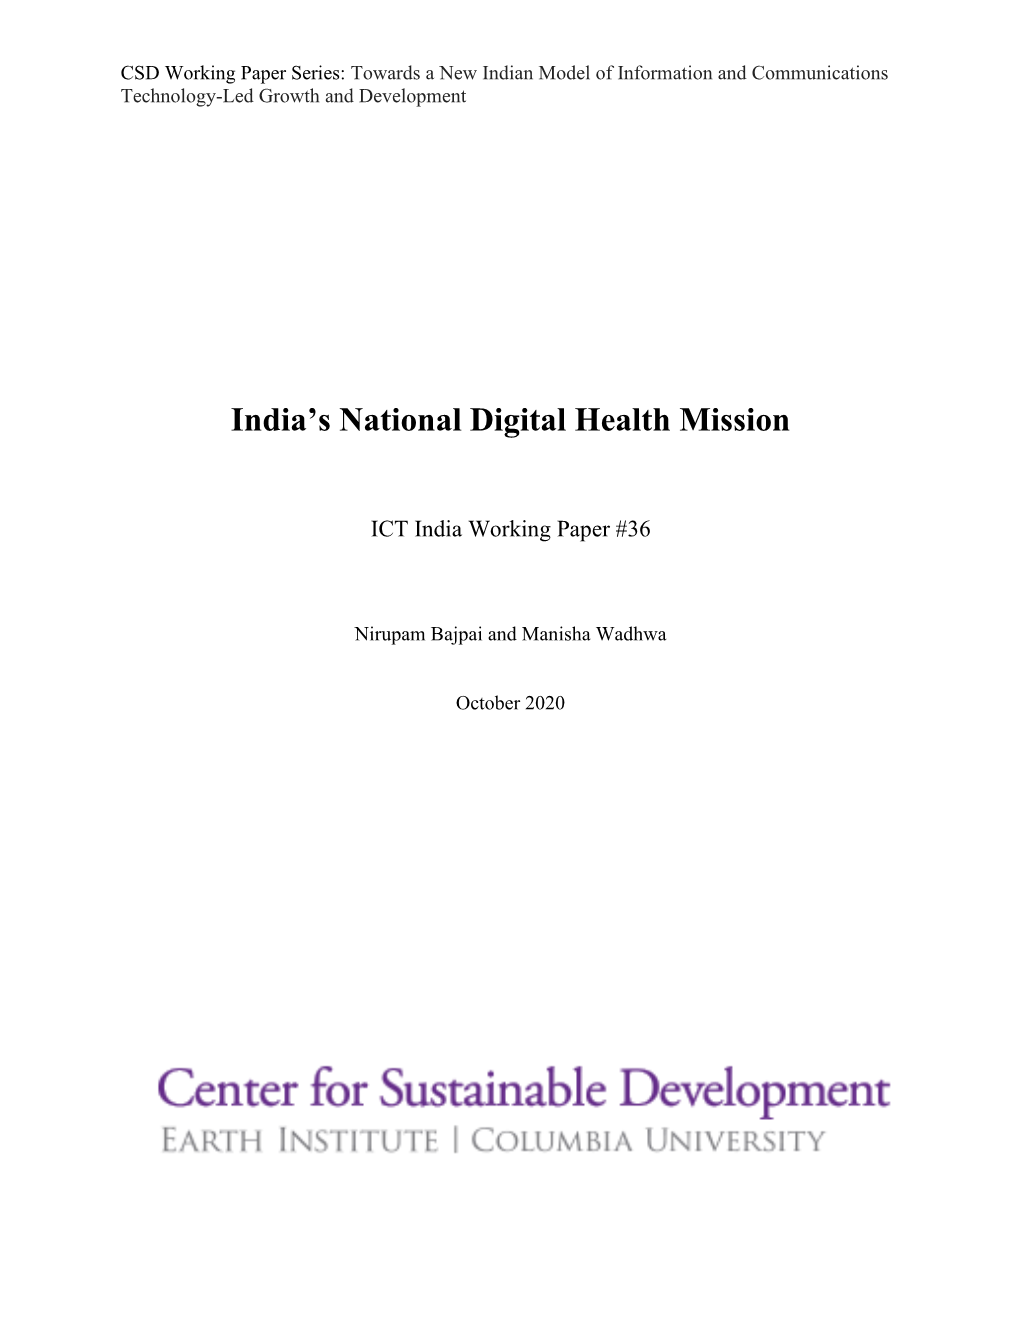 India's National Digital Health Mission